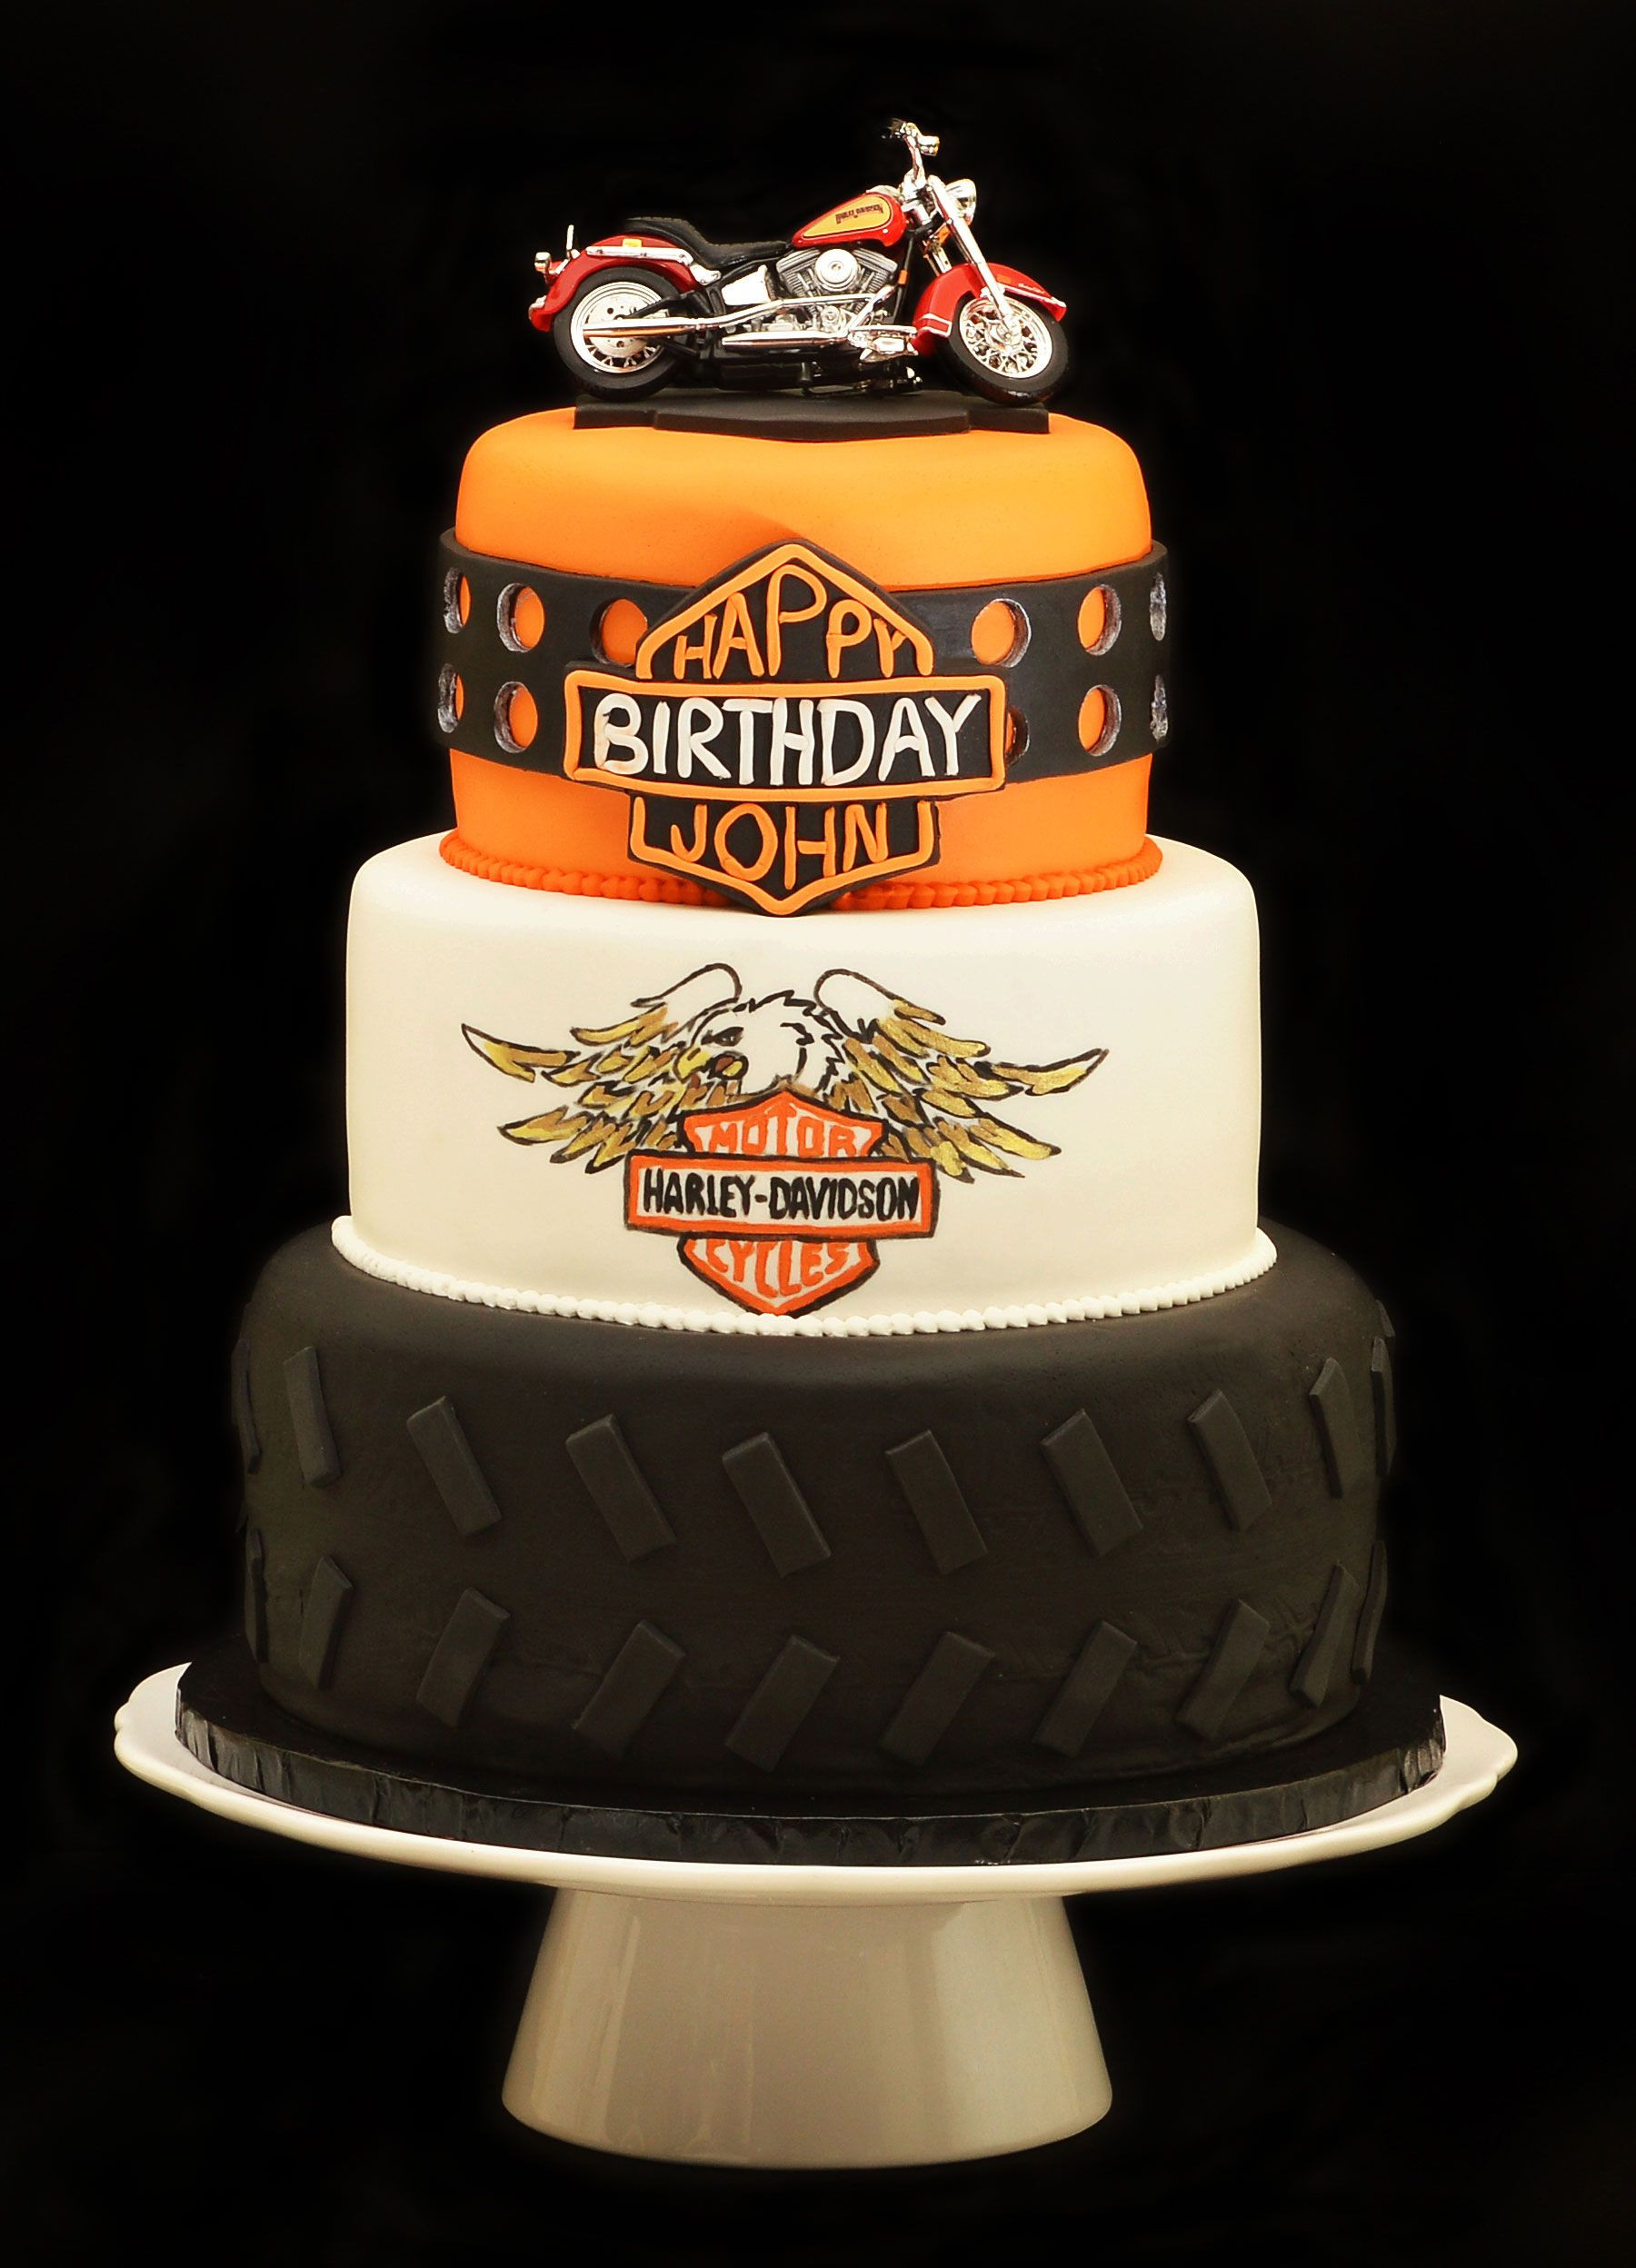 Harley Davidson Birthday Cakes
 Harley Davidson Cake … With images